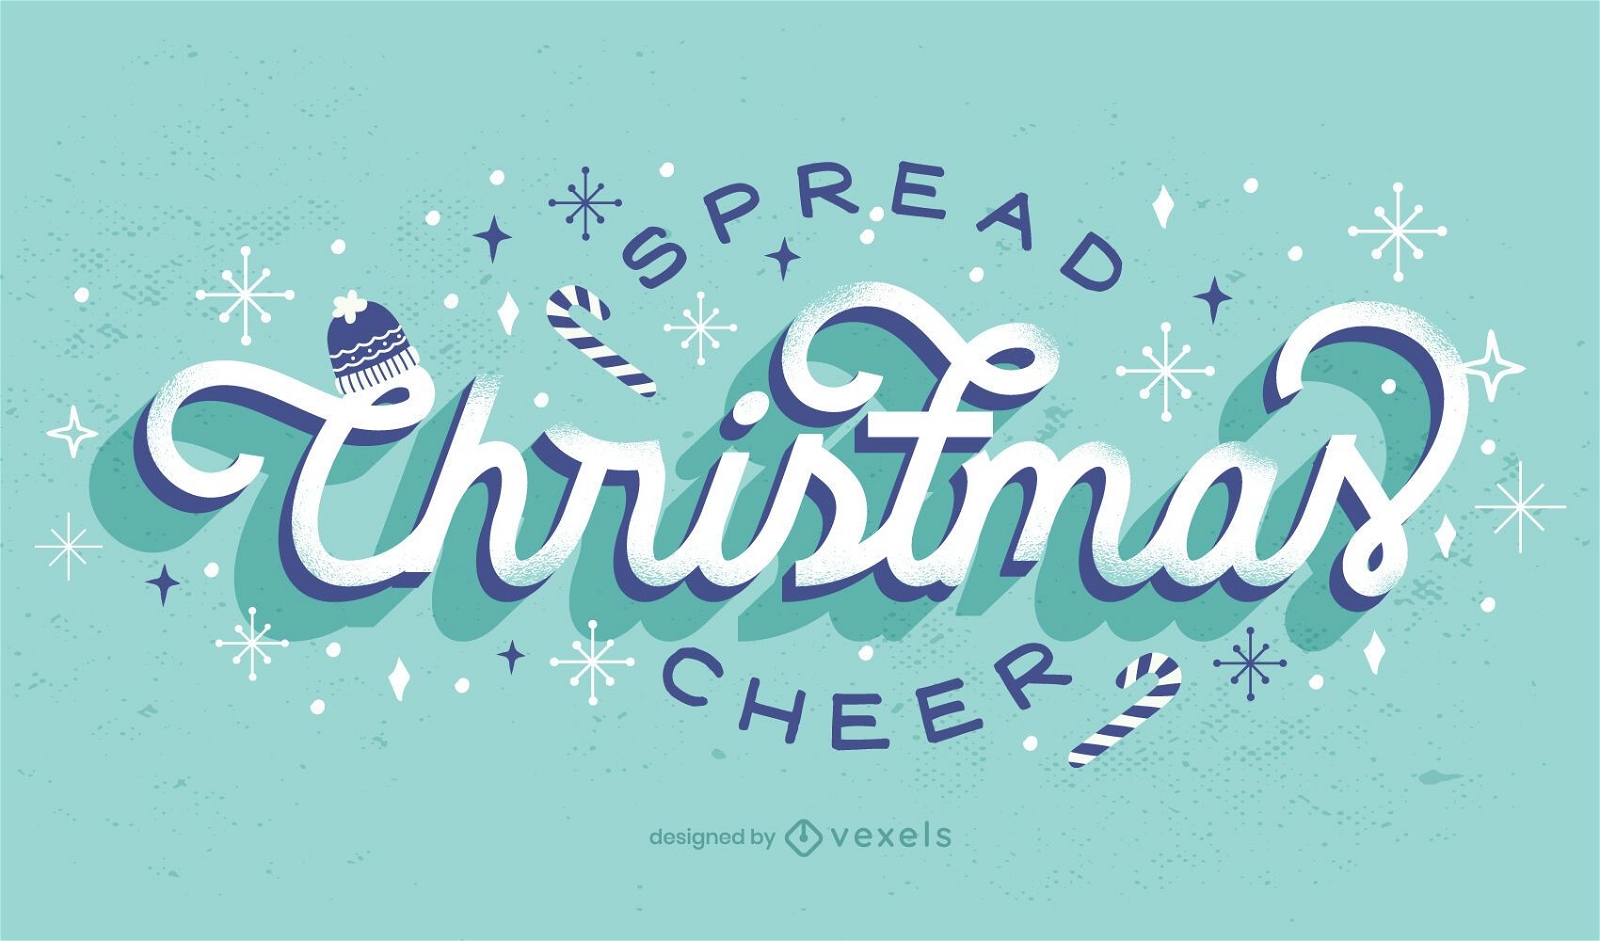 Spread christmas cheer lettering design